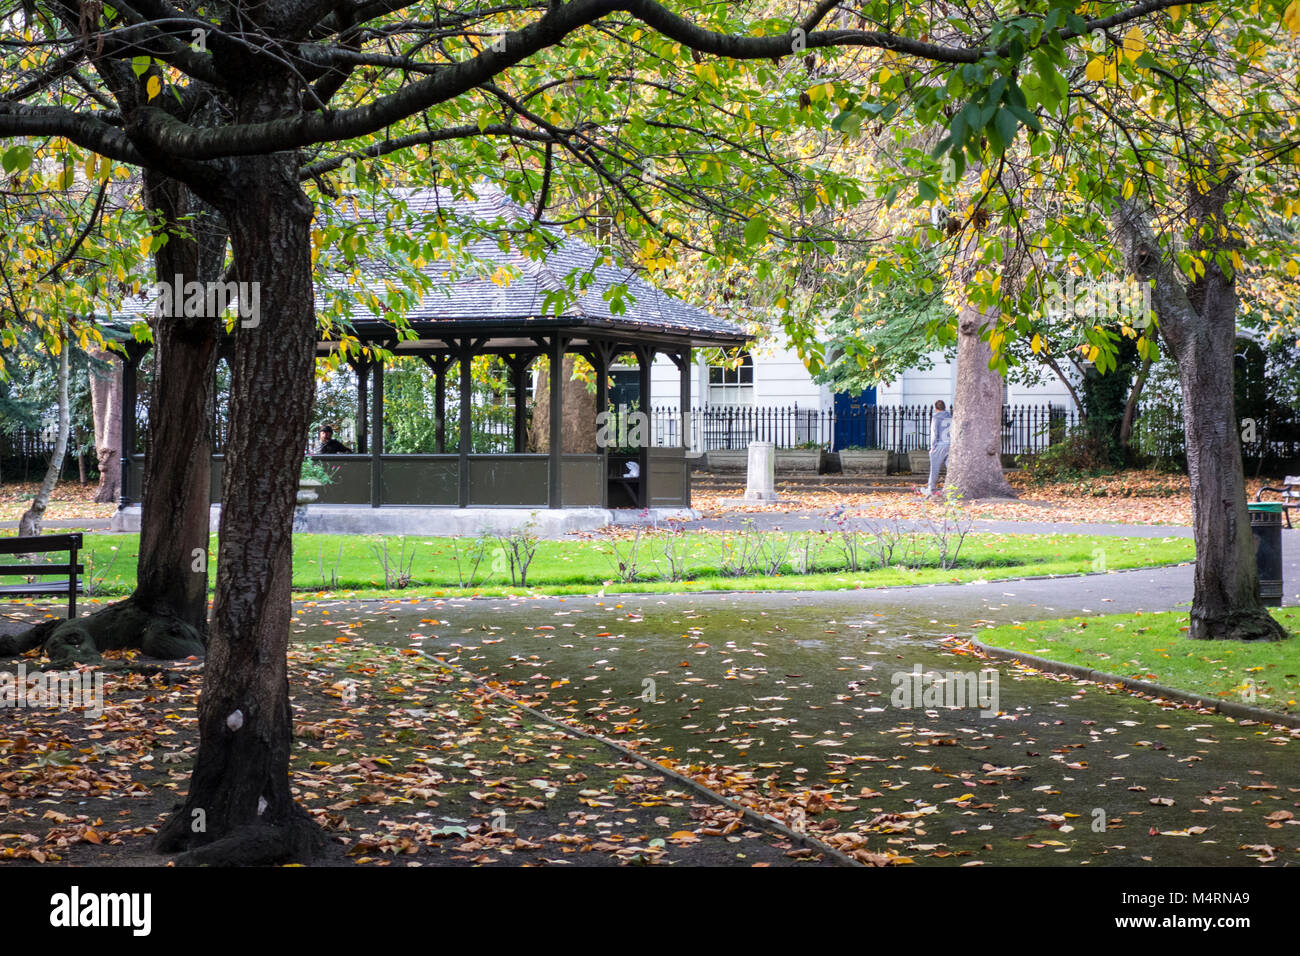 Wilmington Square Public Garden Park, Clerkenwell, London, UK Stockfoto